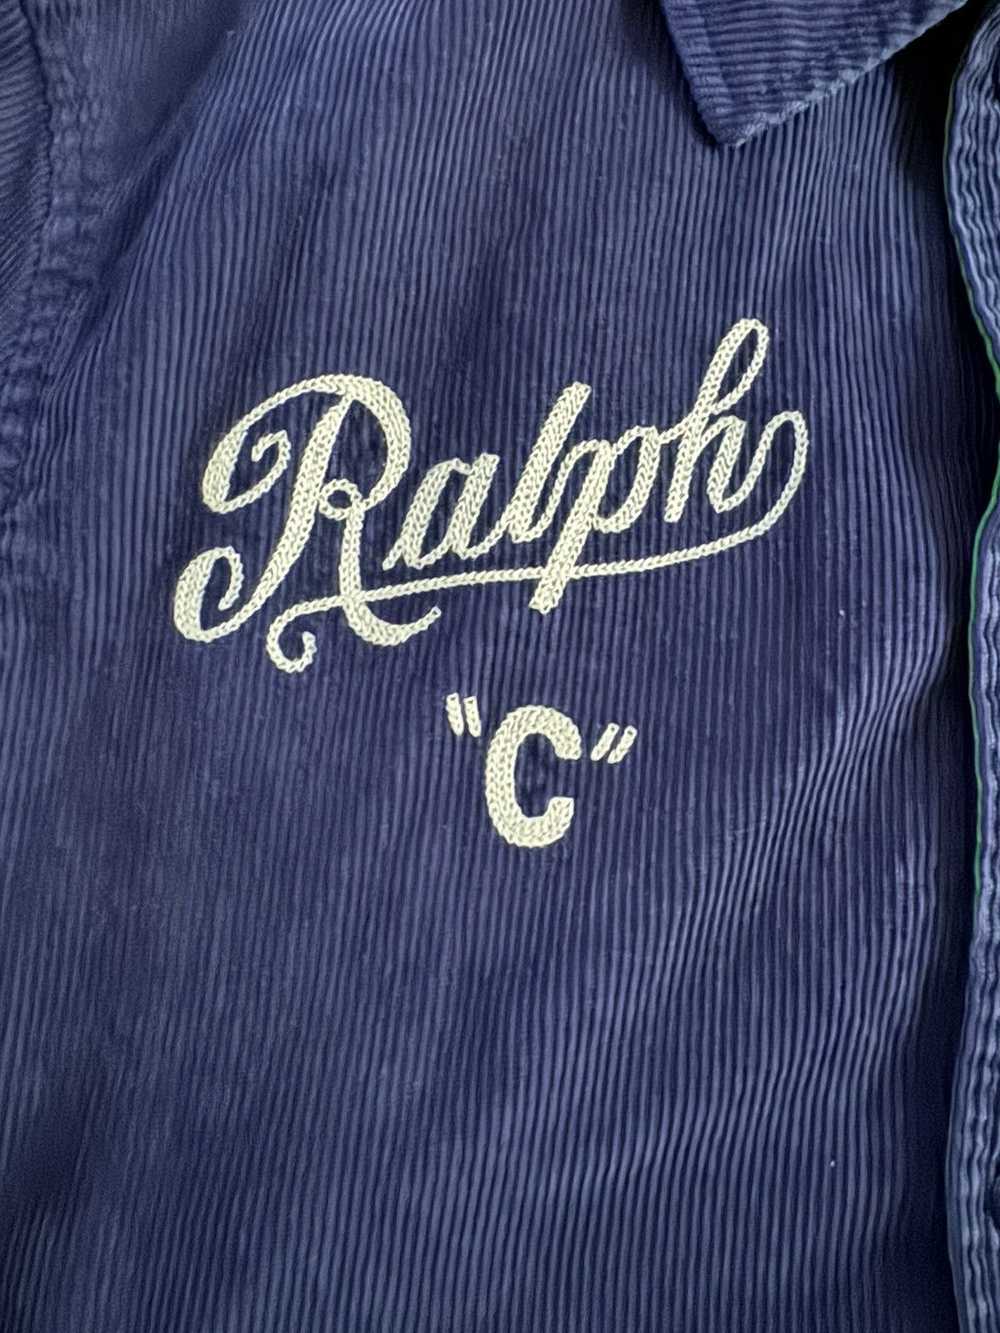 Polo Ralph Lauren Reversible Varsity Jacket - image 4